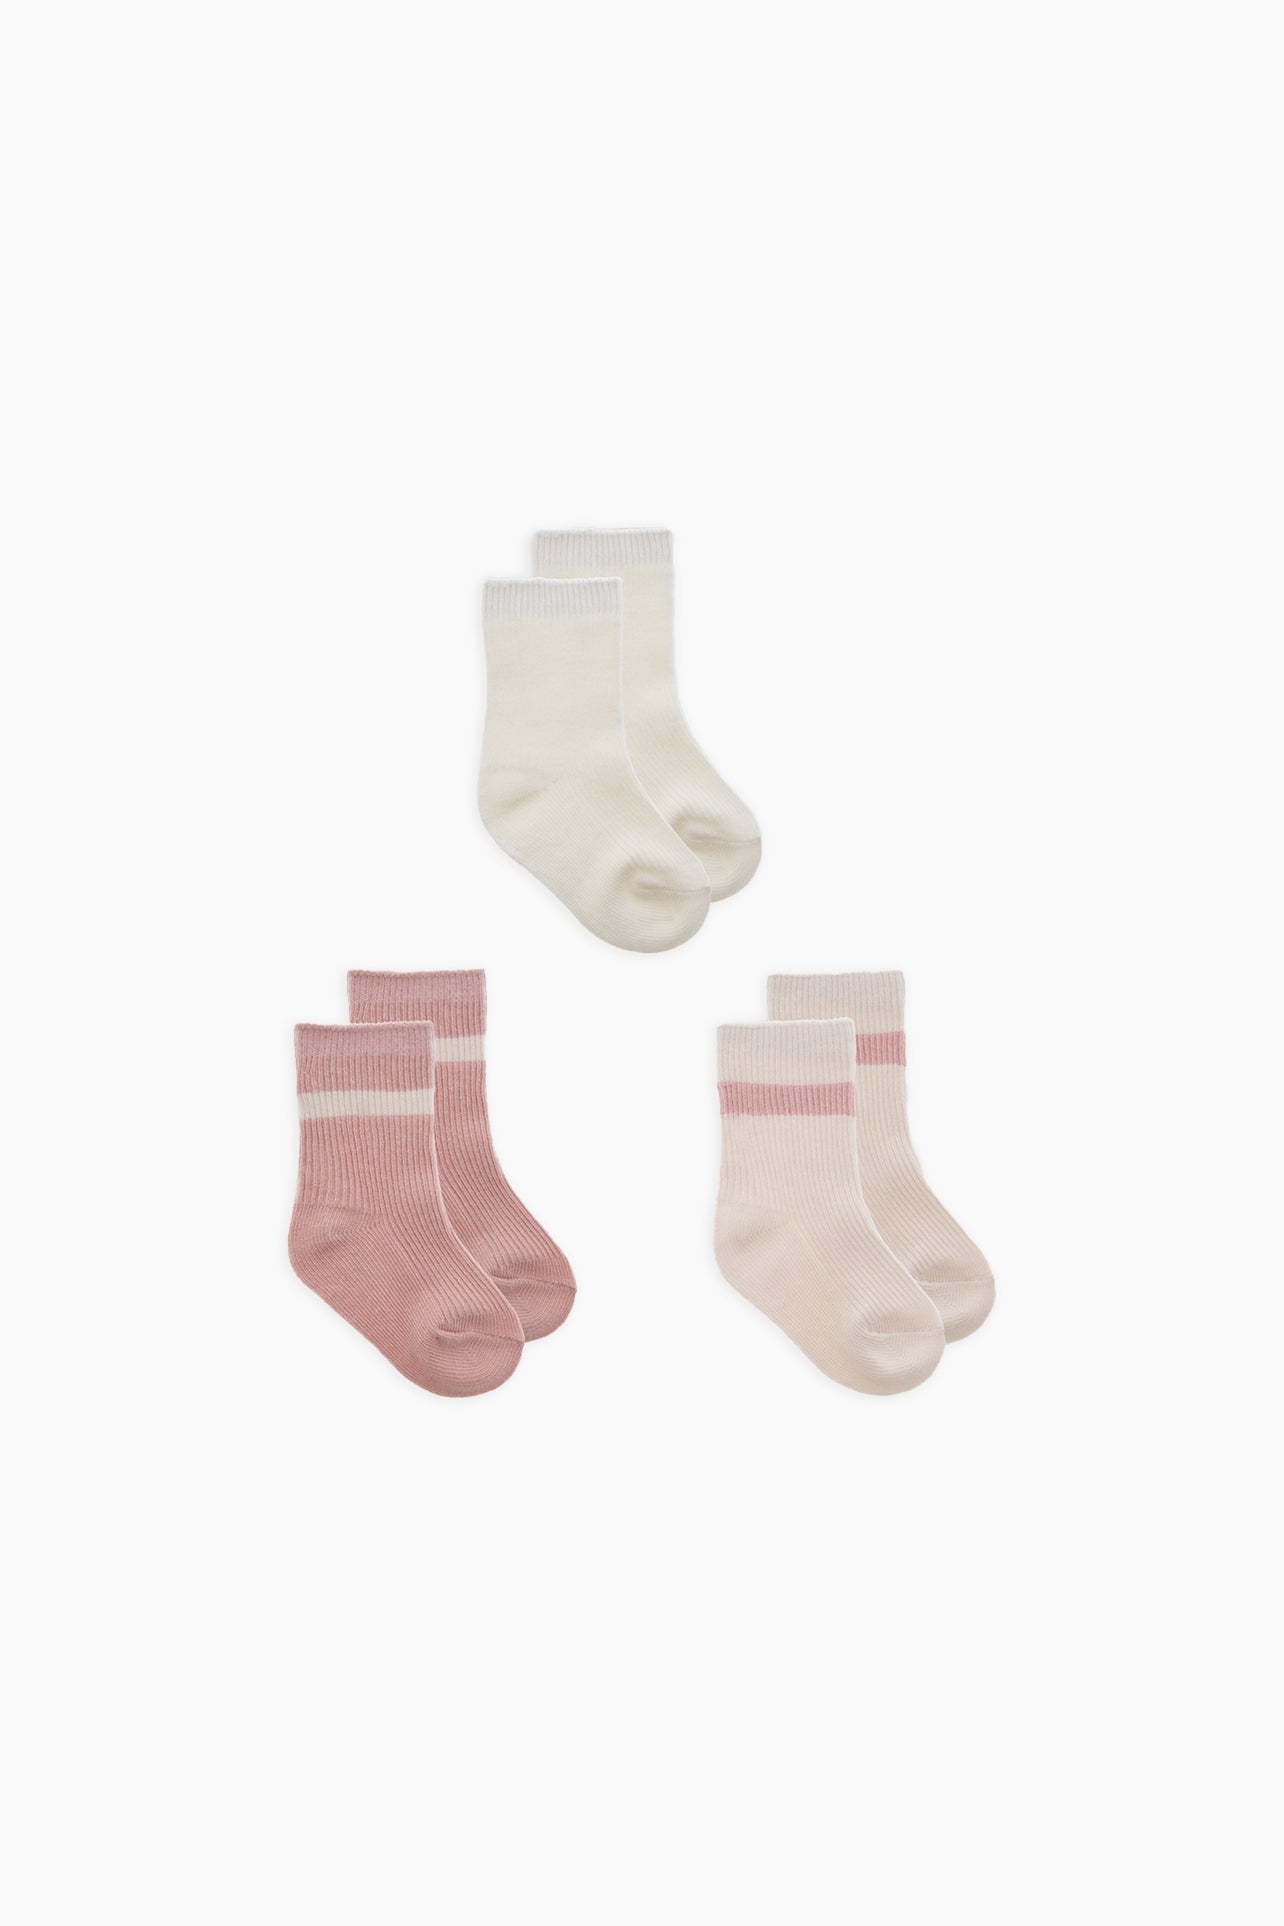 Snugabye Organic 3-Pack Baby Crew Socks - Misty Rose